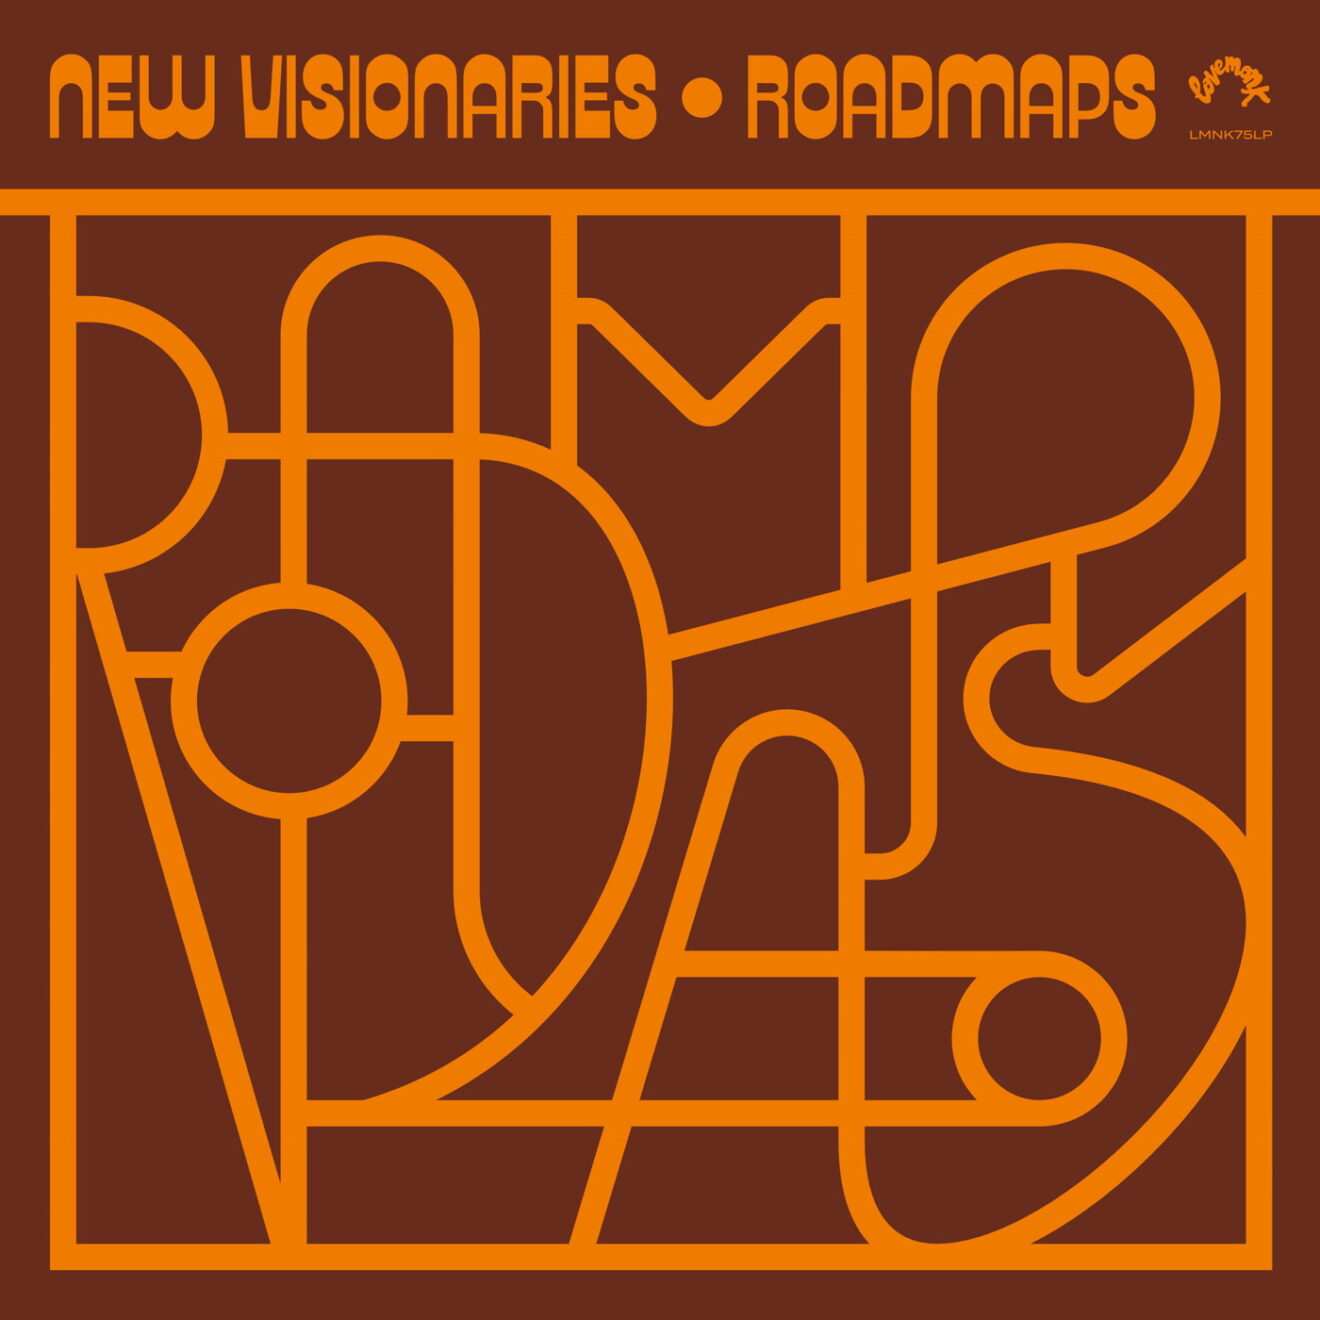 Hörenswert: The New Visionaries - “Roadmaps”